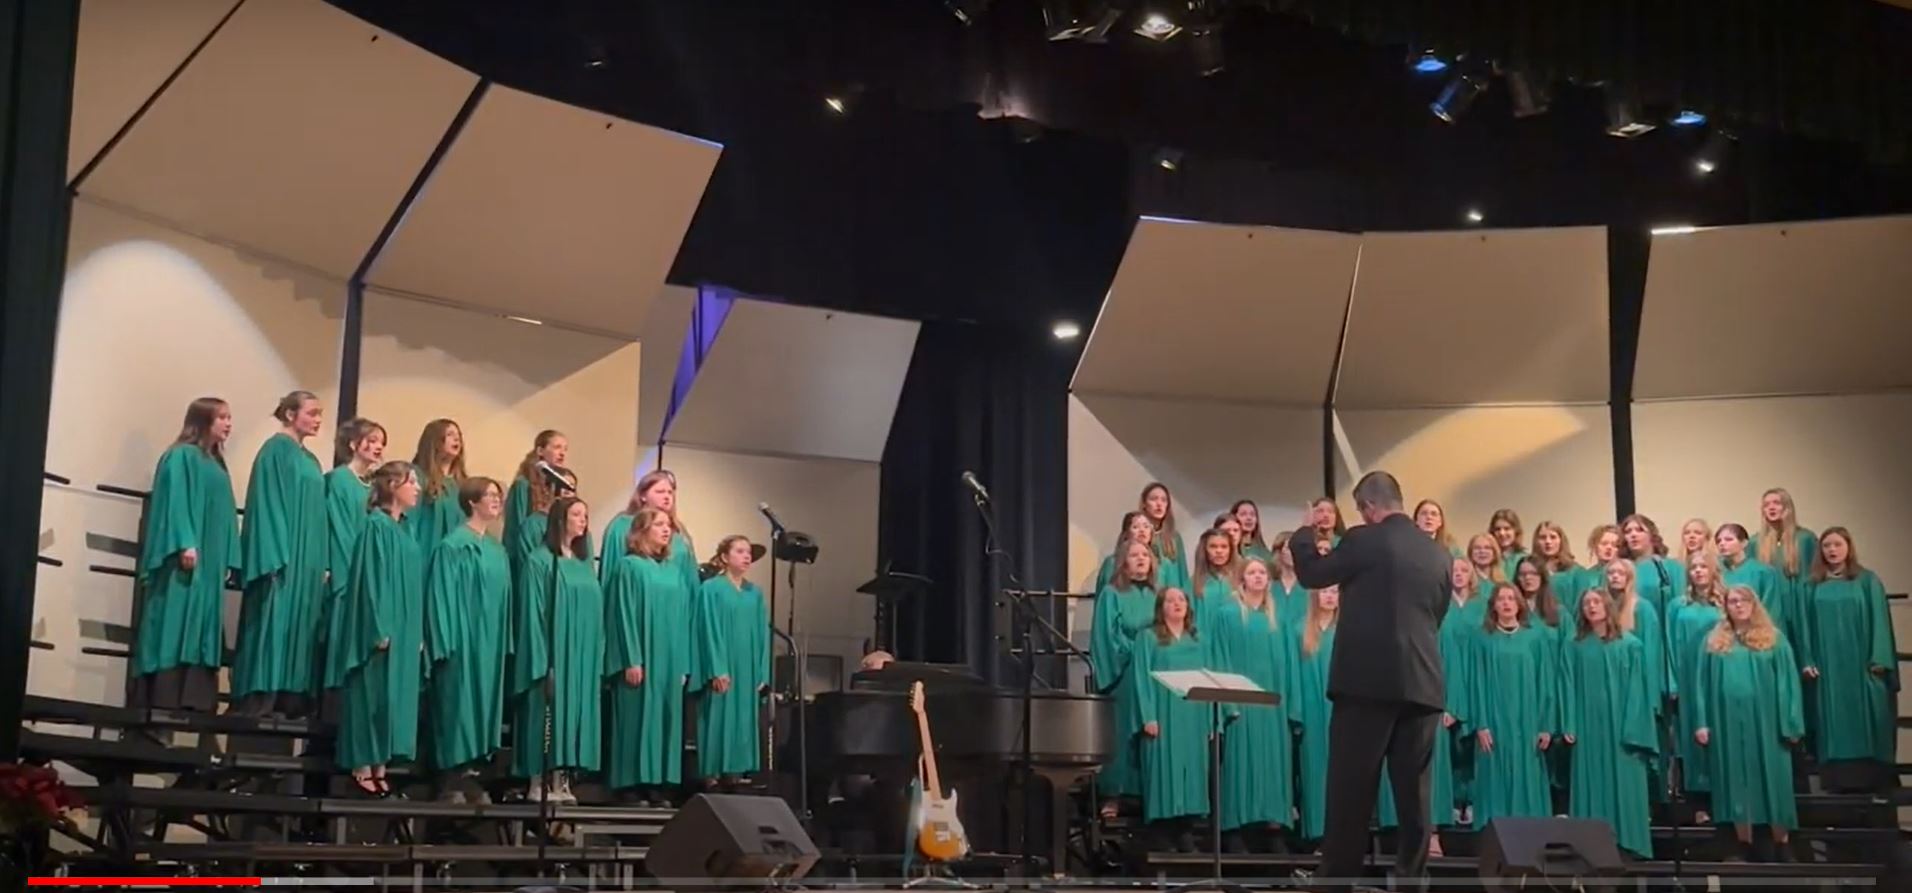 Tenor choir sings at concert